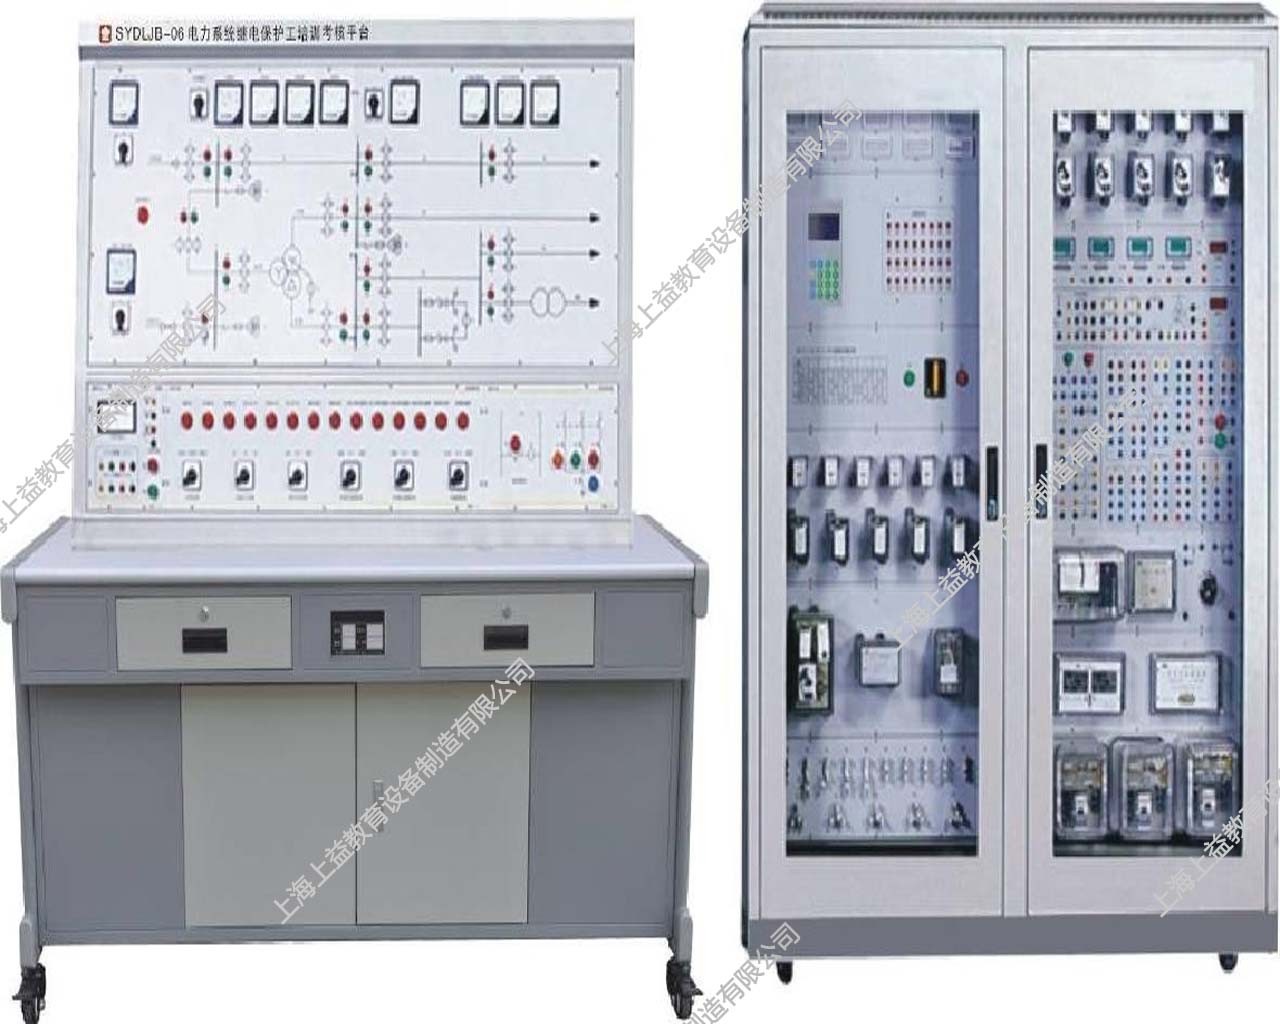 SYDLJB-06電力系統繼電保護工培訓考核平臺